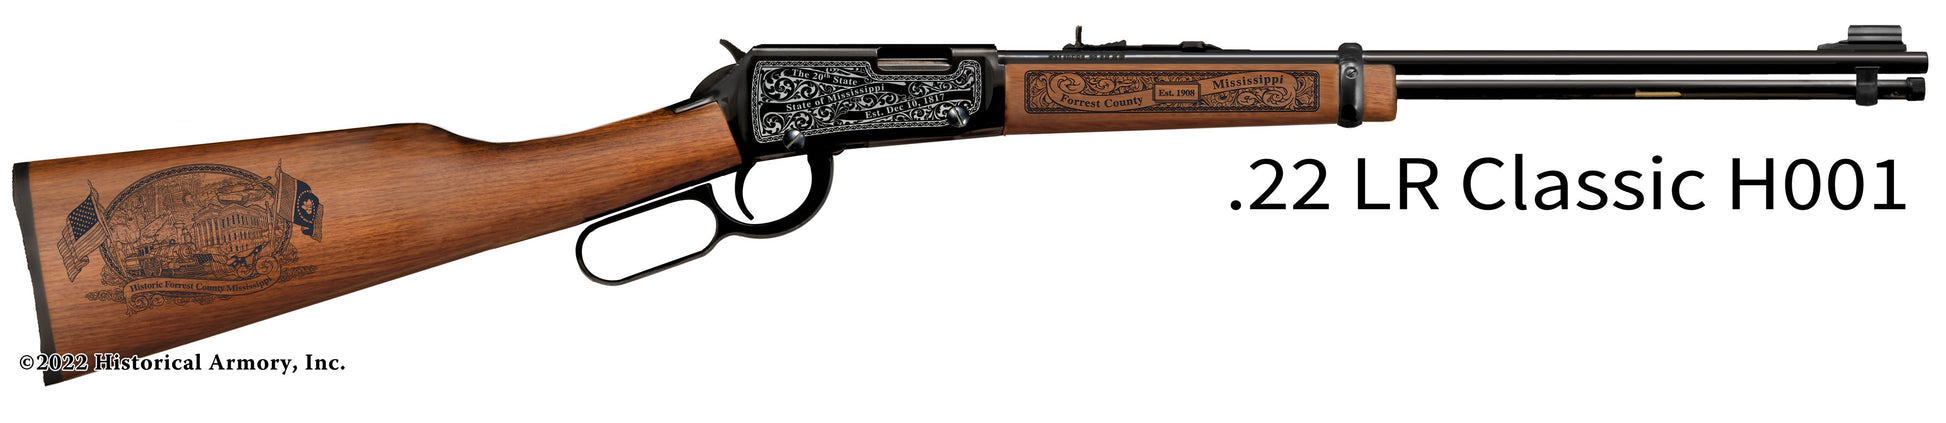 Forrest County Mississippi Engraved Henry H001 Rifle